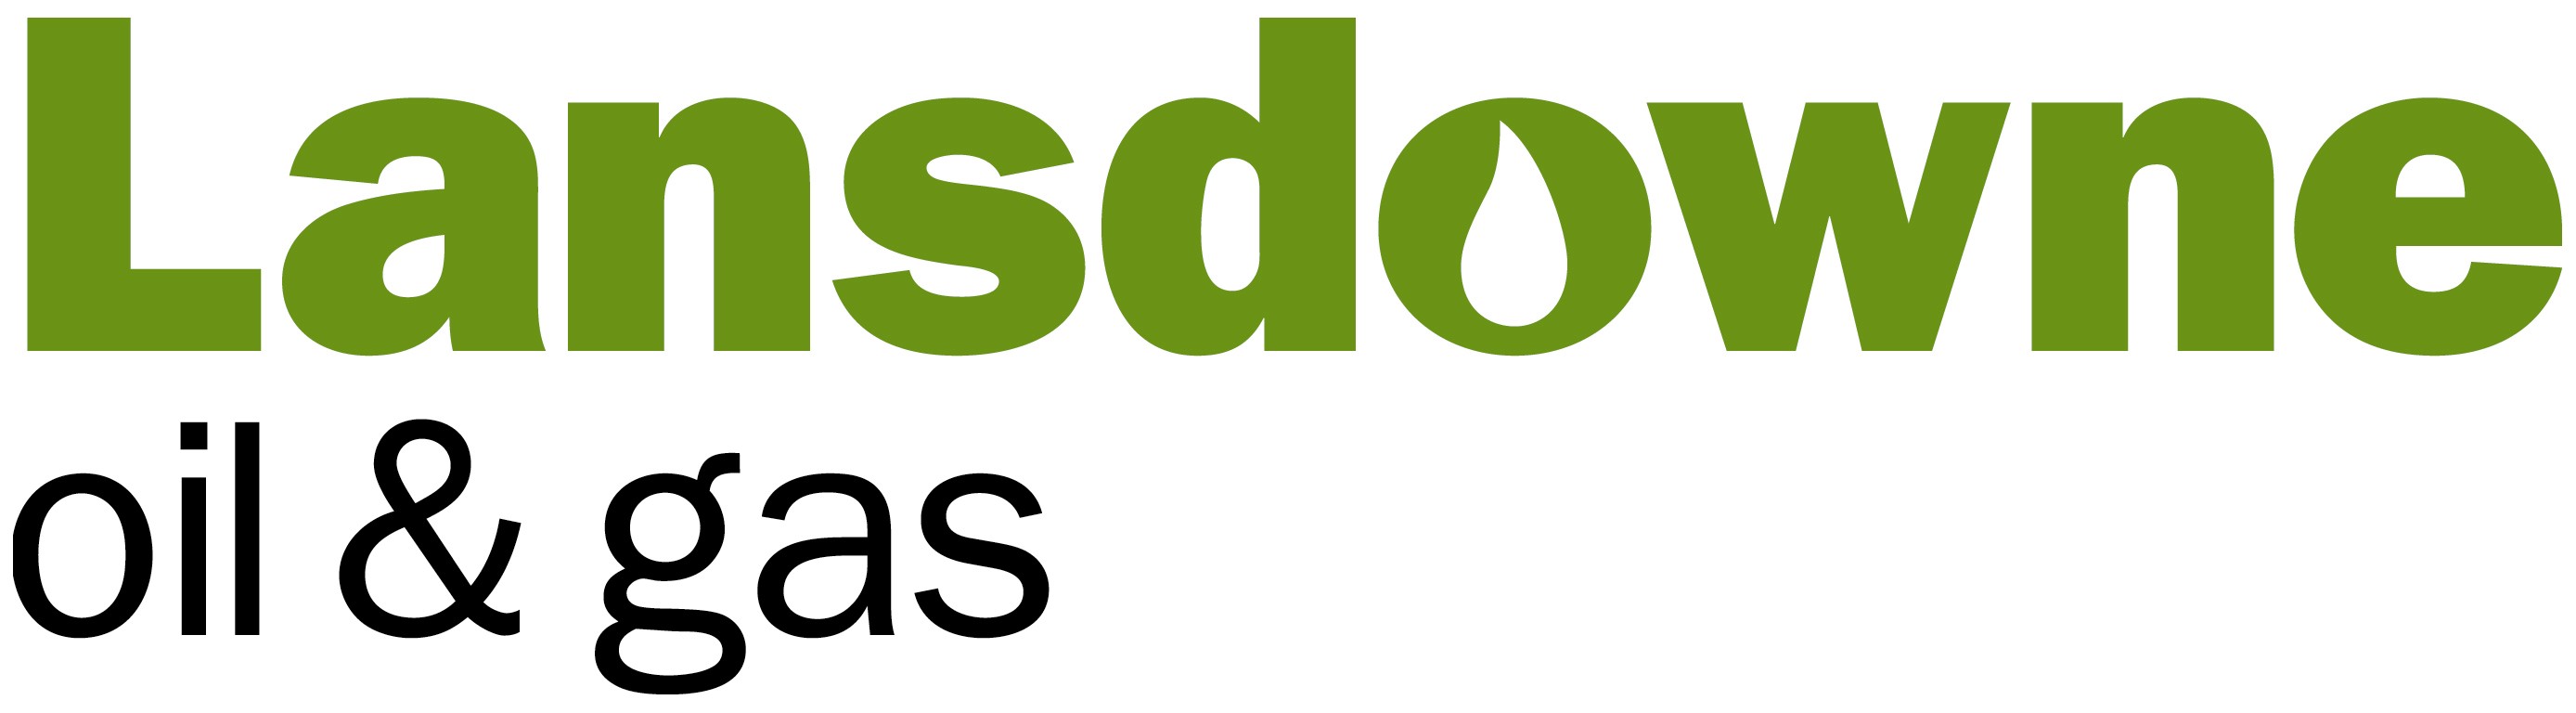 Lansdowne Oil & Gas logo